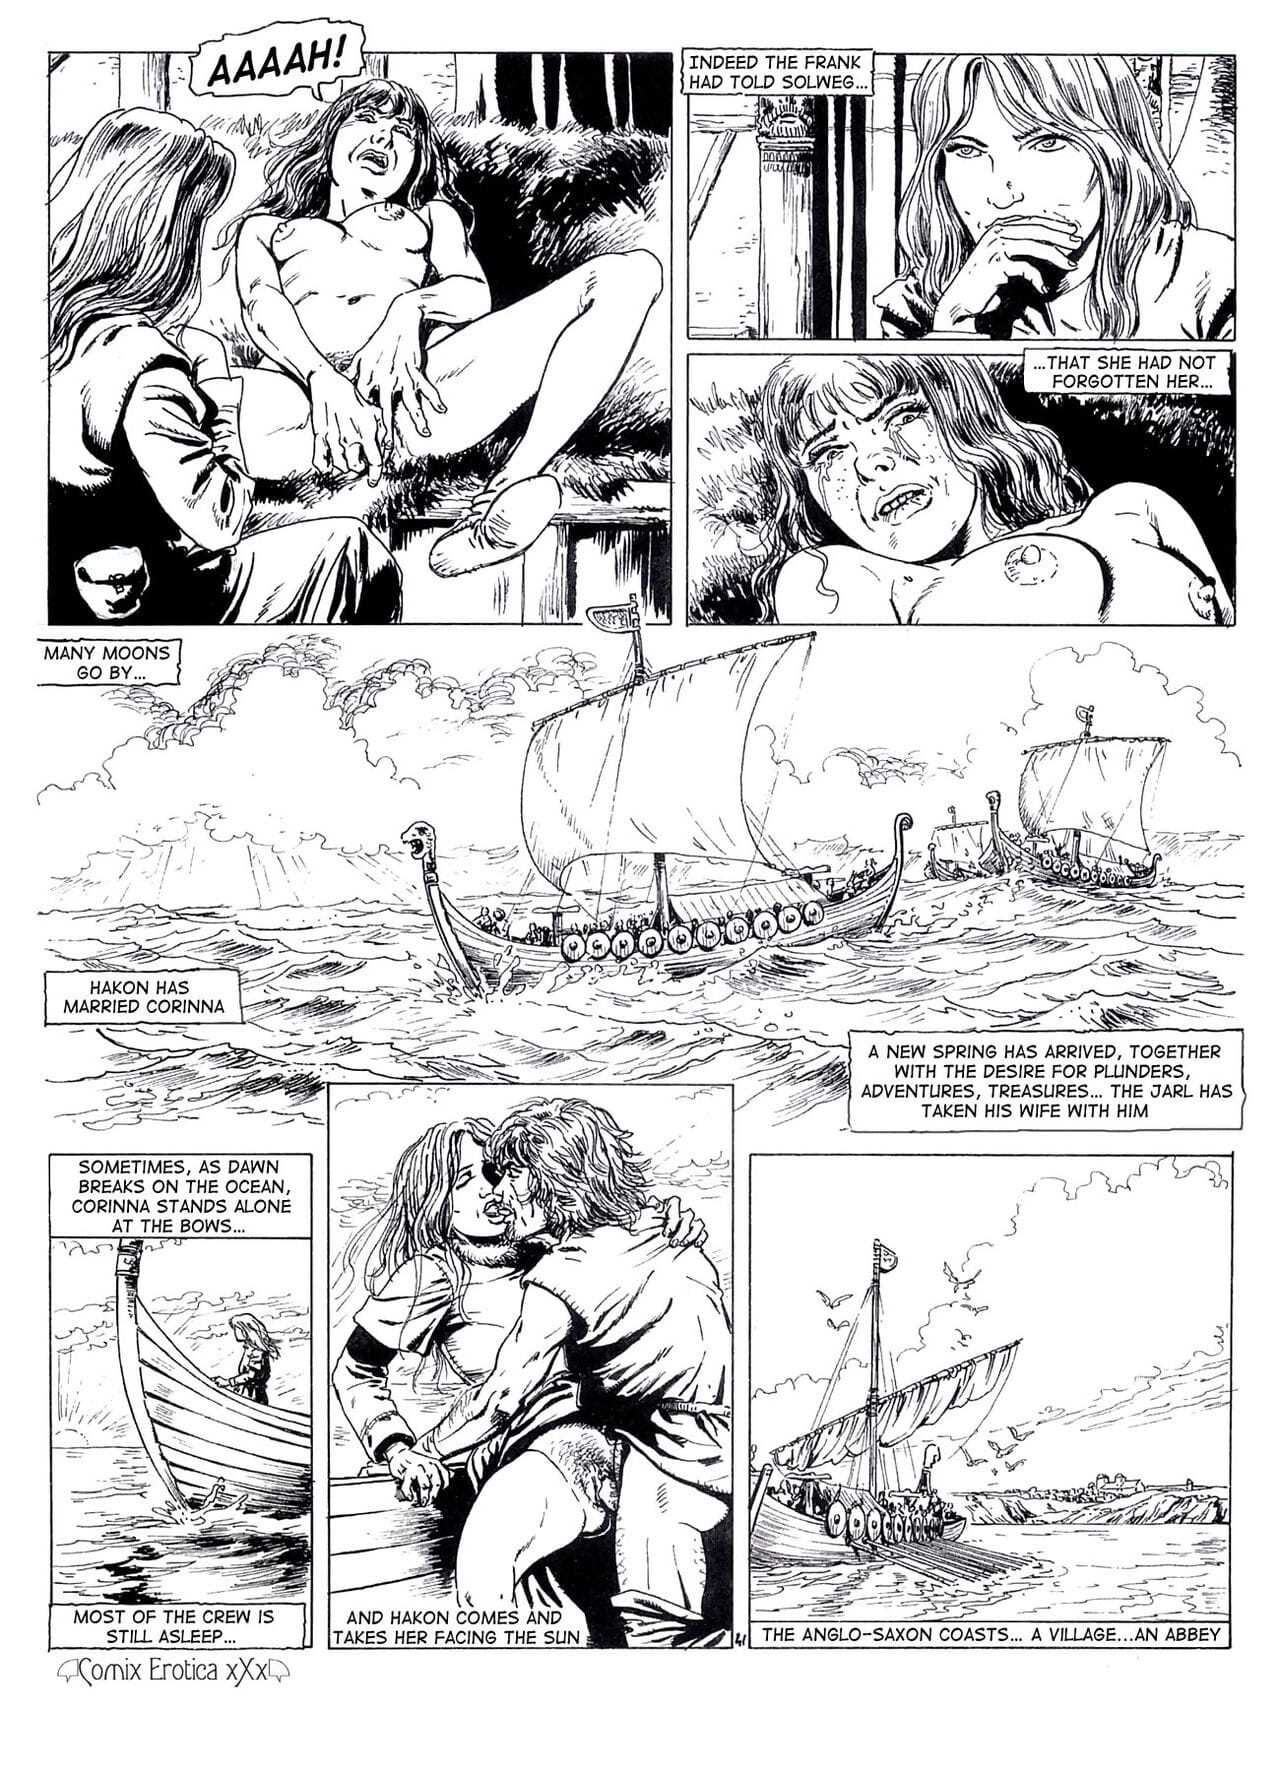 Vikings 2 - part 2 page 1